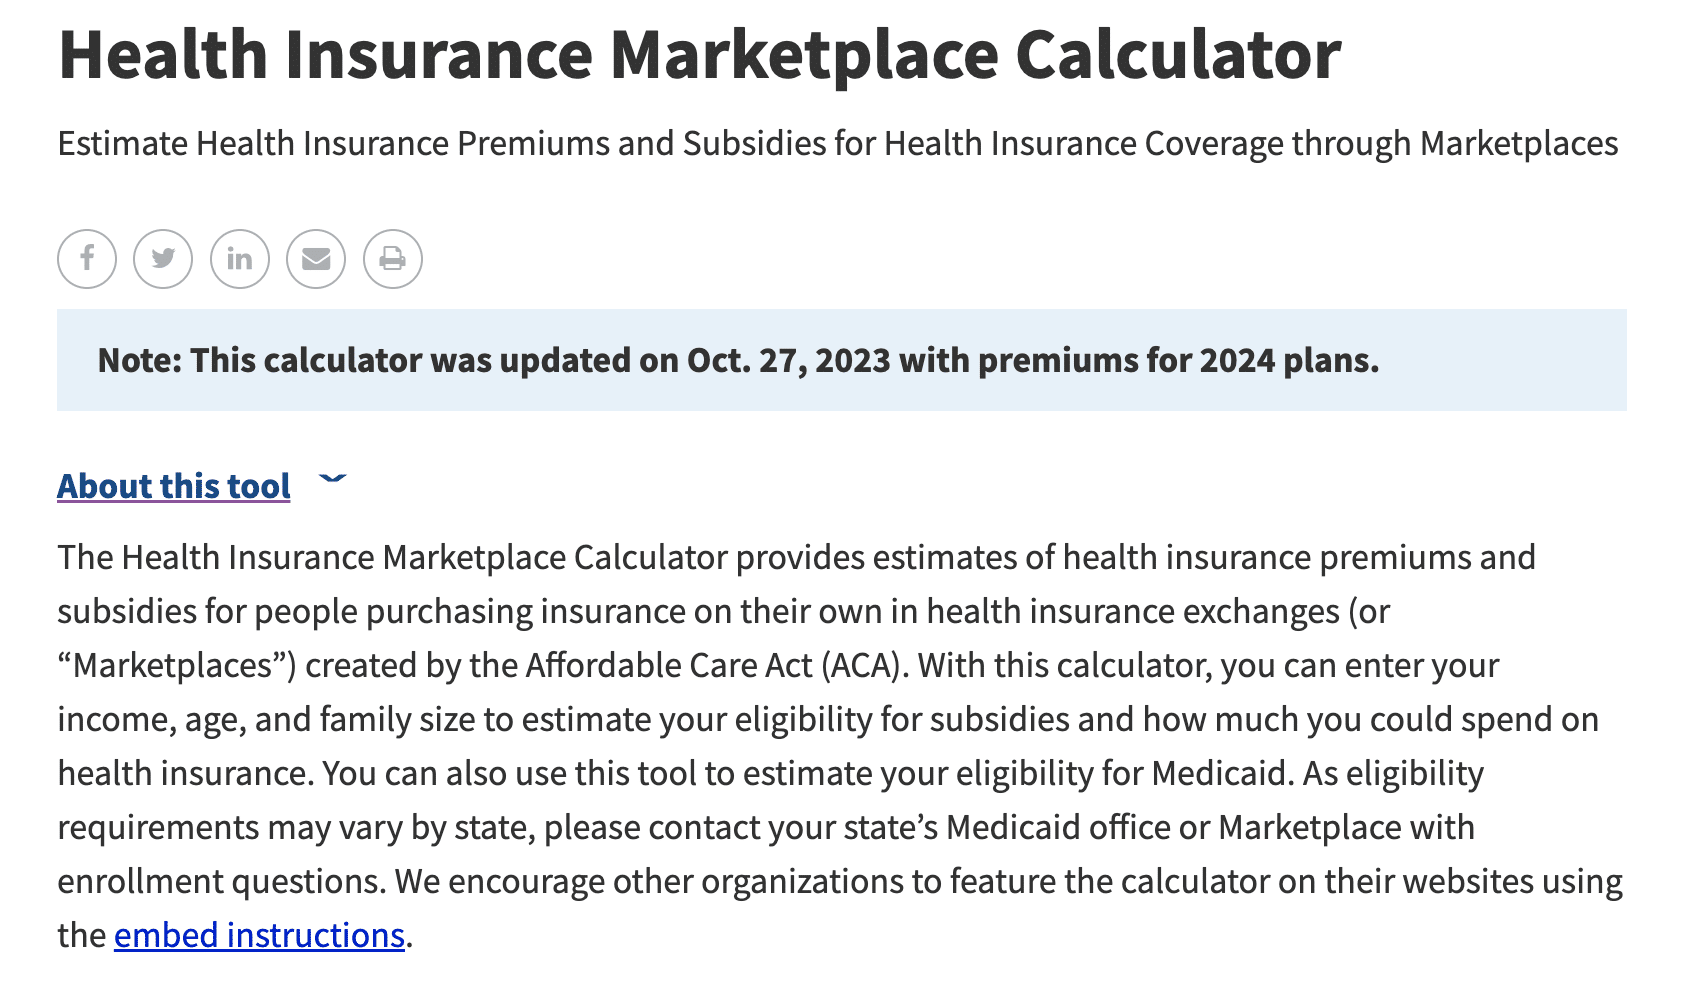 KFF Health Insurance Marketplace Calculator